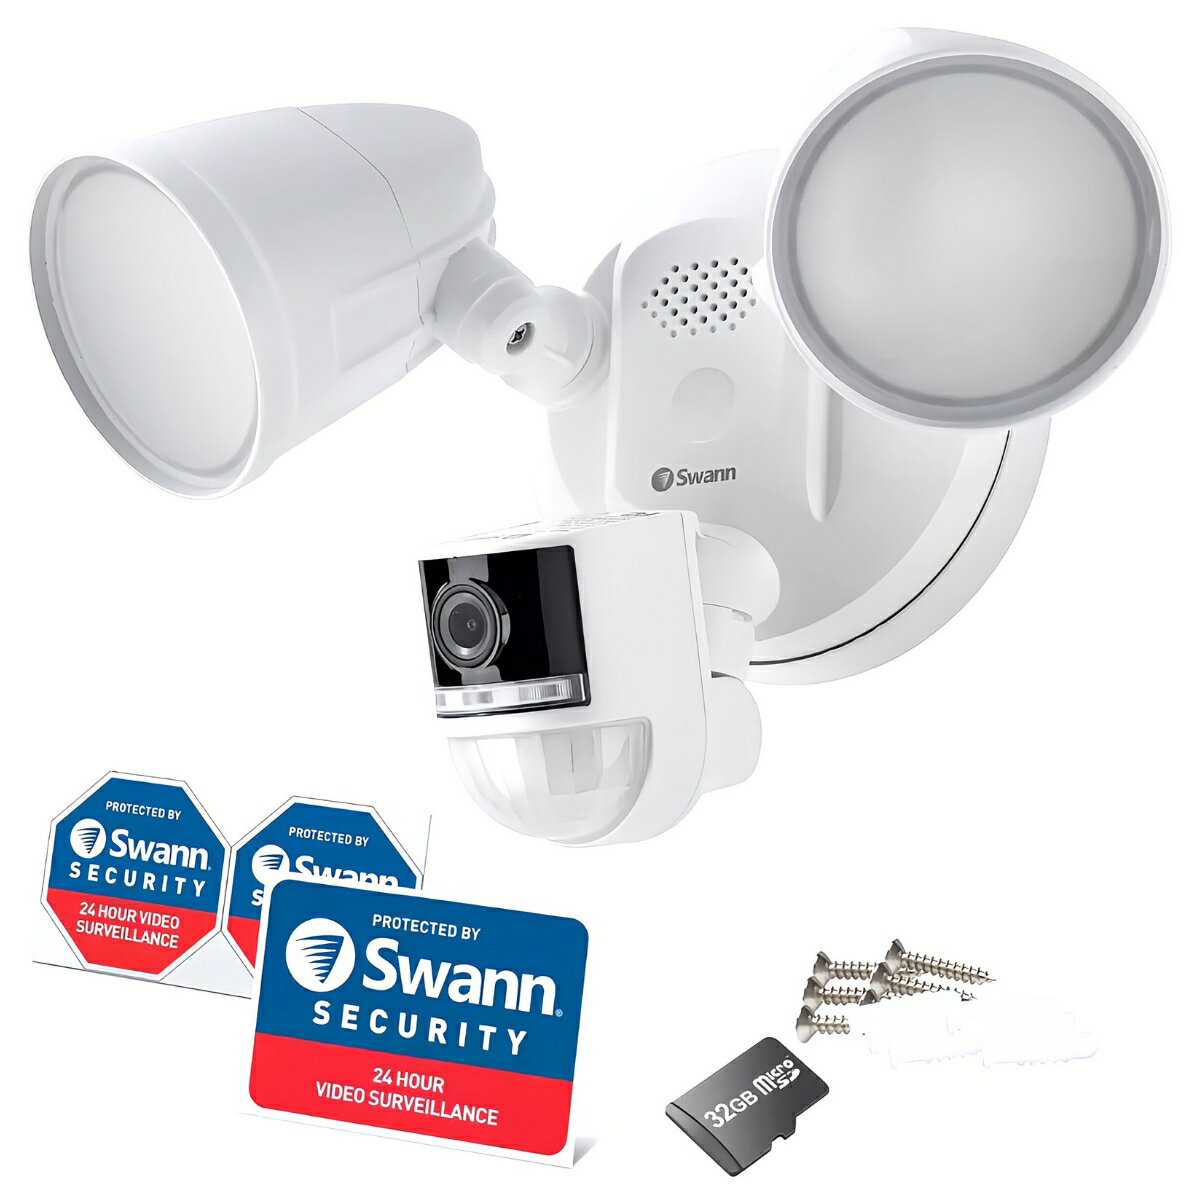 Swann（スワン）Wifi フロードライト セキュリティー カメラ SWIFI-4KFLOCAM-JP 56744 24時間365日 安心をお届け 56744 4K Ultra HD 画像 動画 高画質 記録 再生 マイク スピーカー 侵入者への警告 会話可